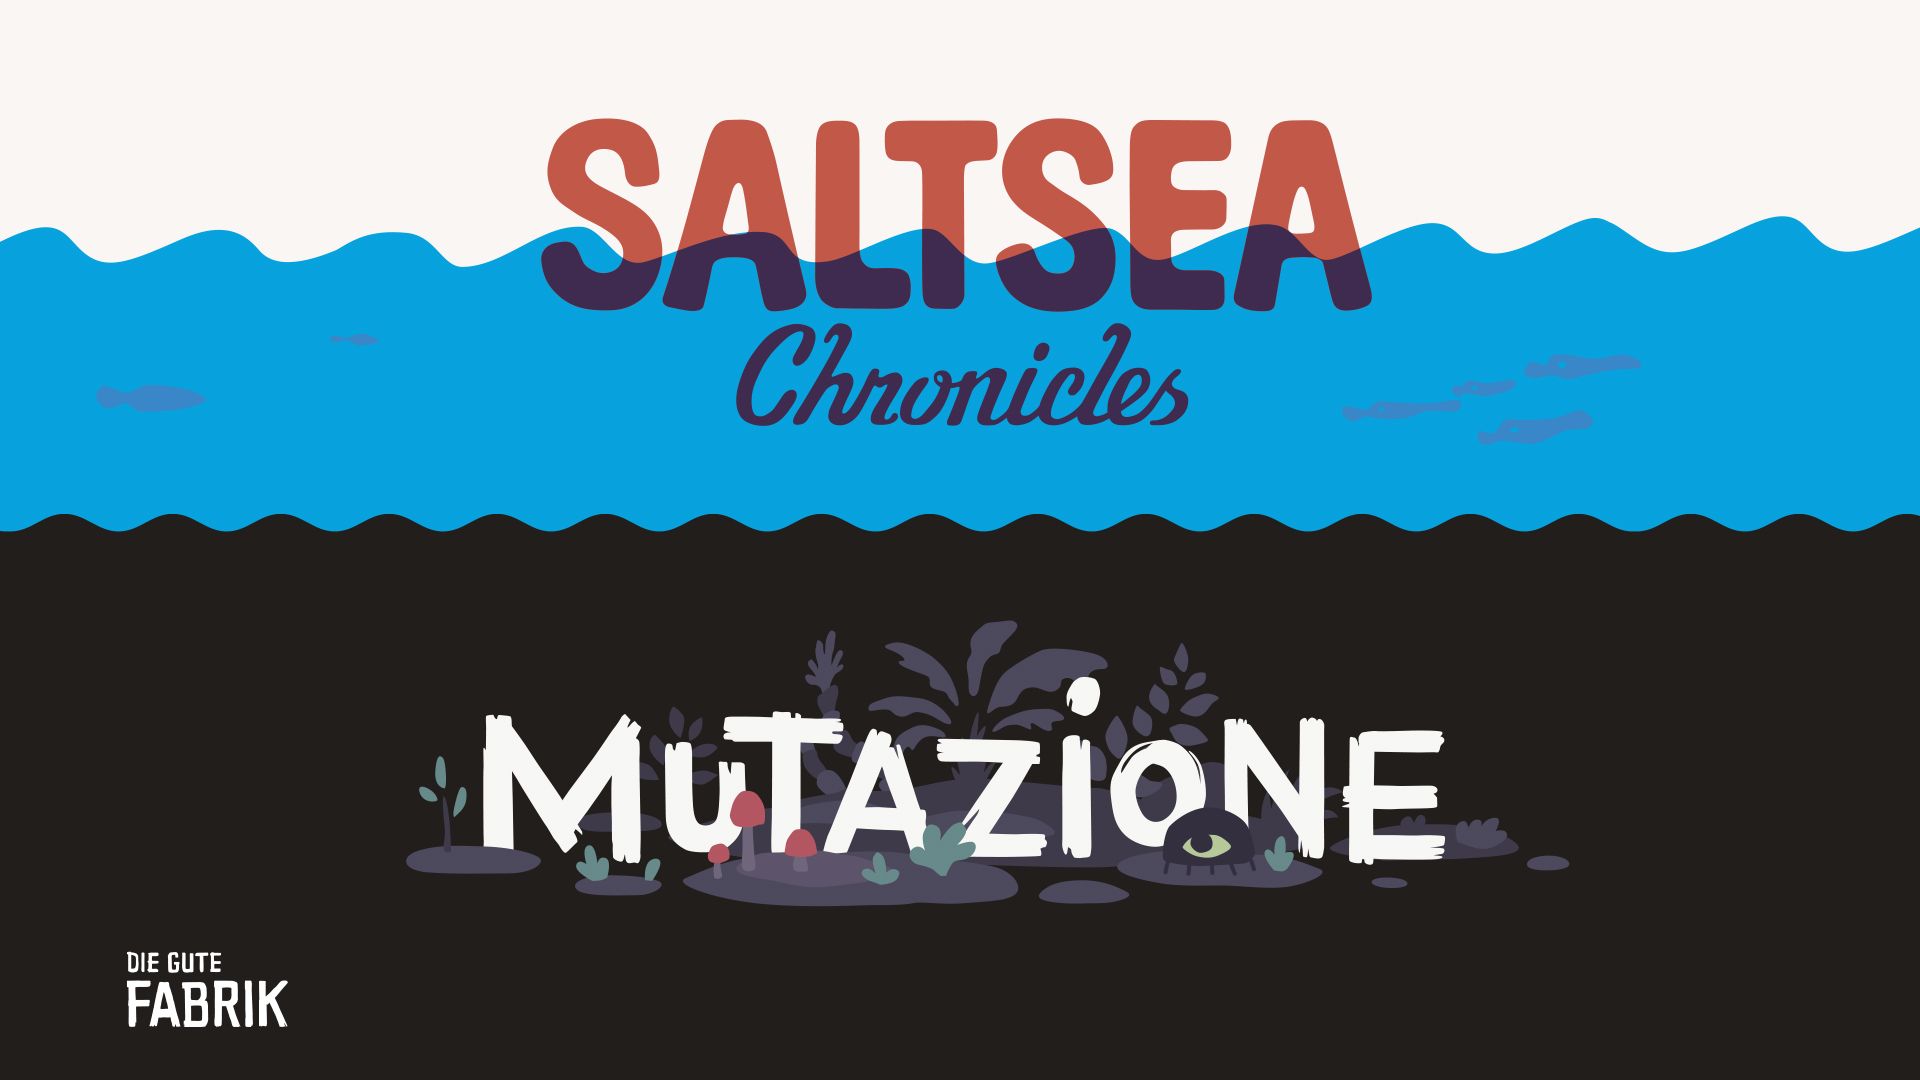 Logo image for the Saltsea Chronicles + Mutazione bundle on Steam